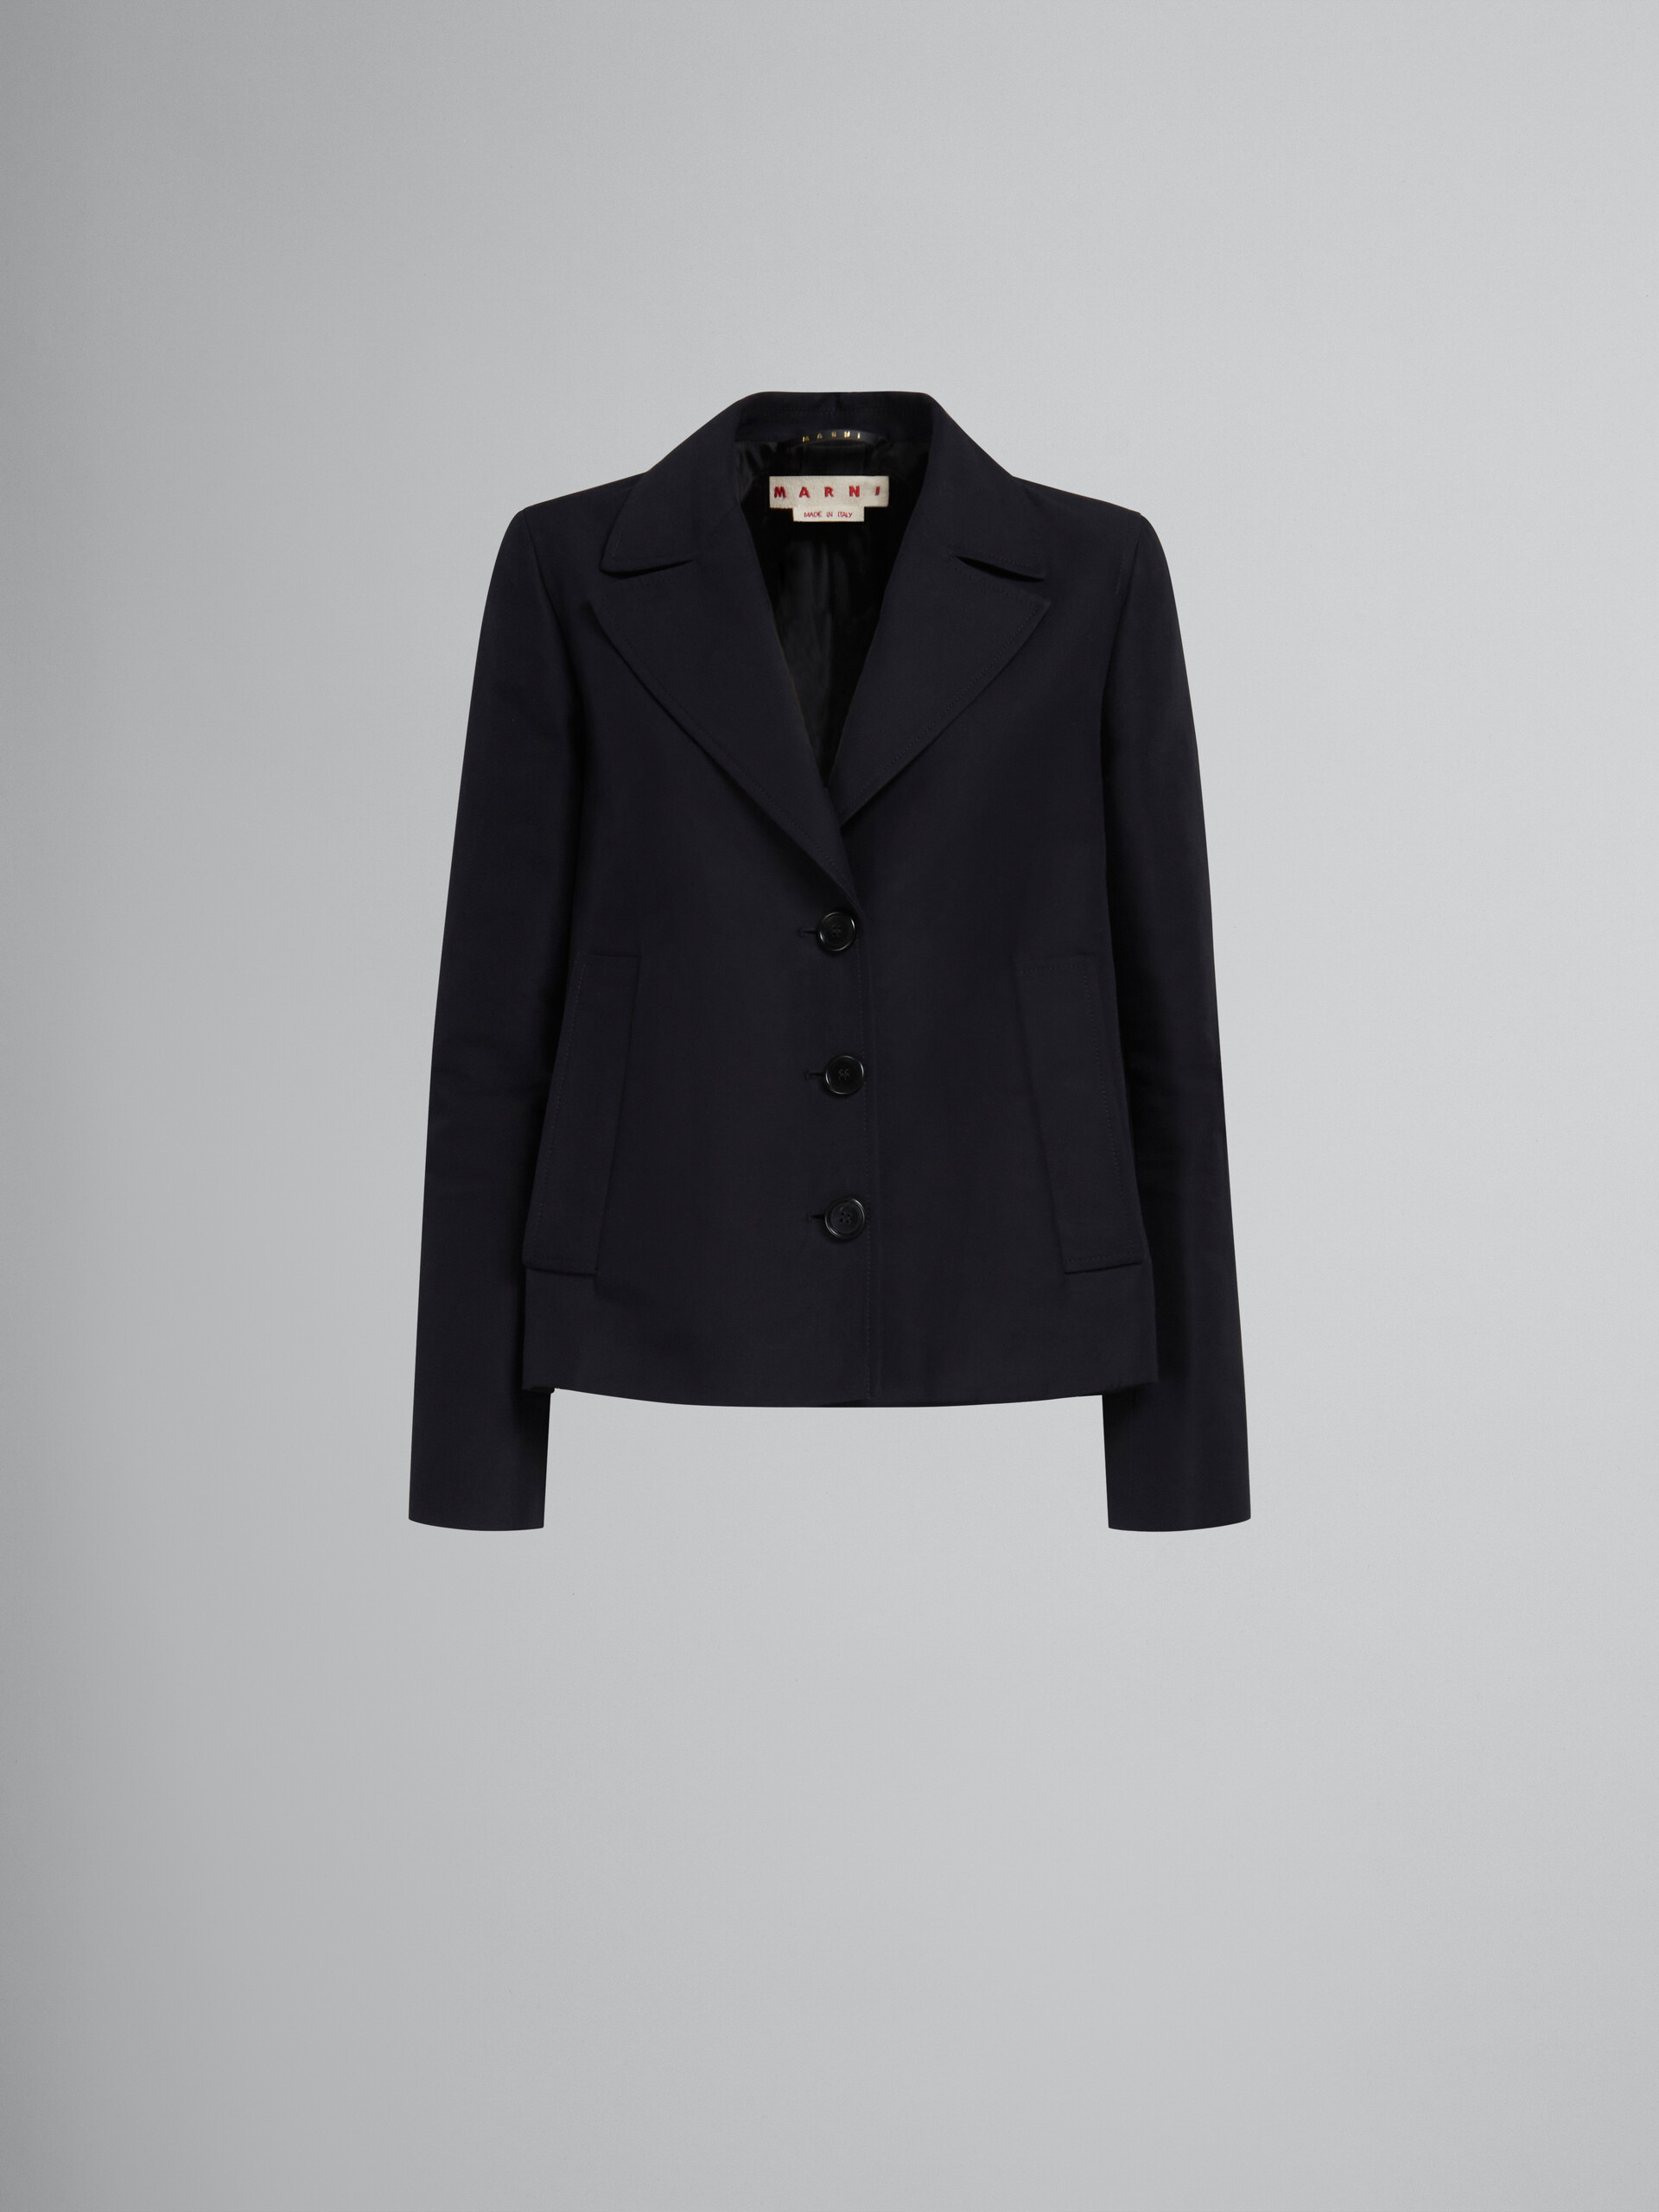 Black A-line cady jacket with back pleat - Jackets - Image 1